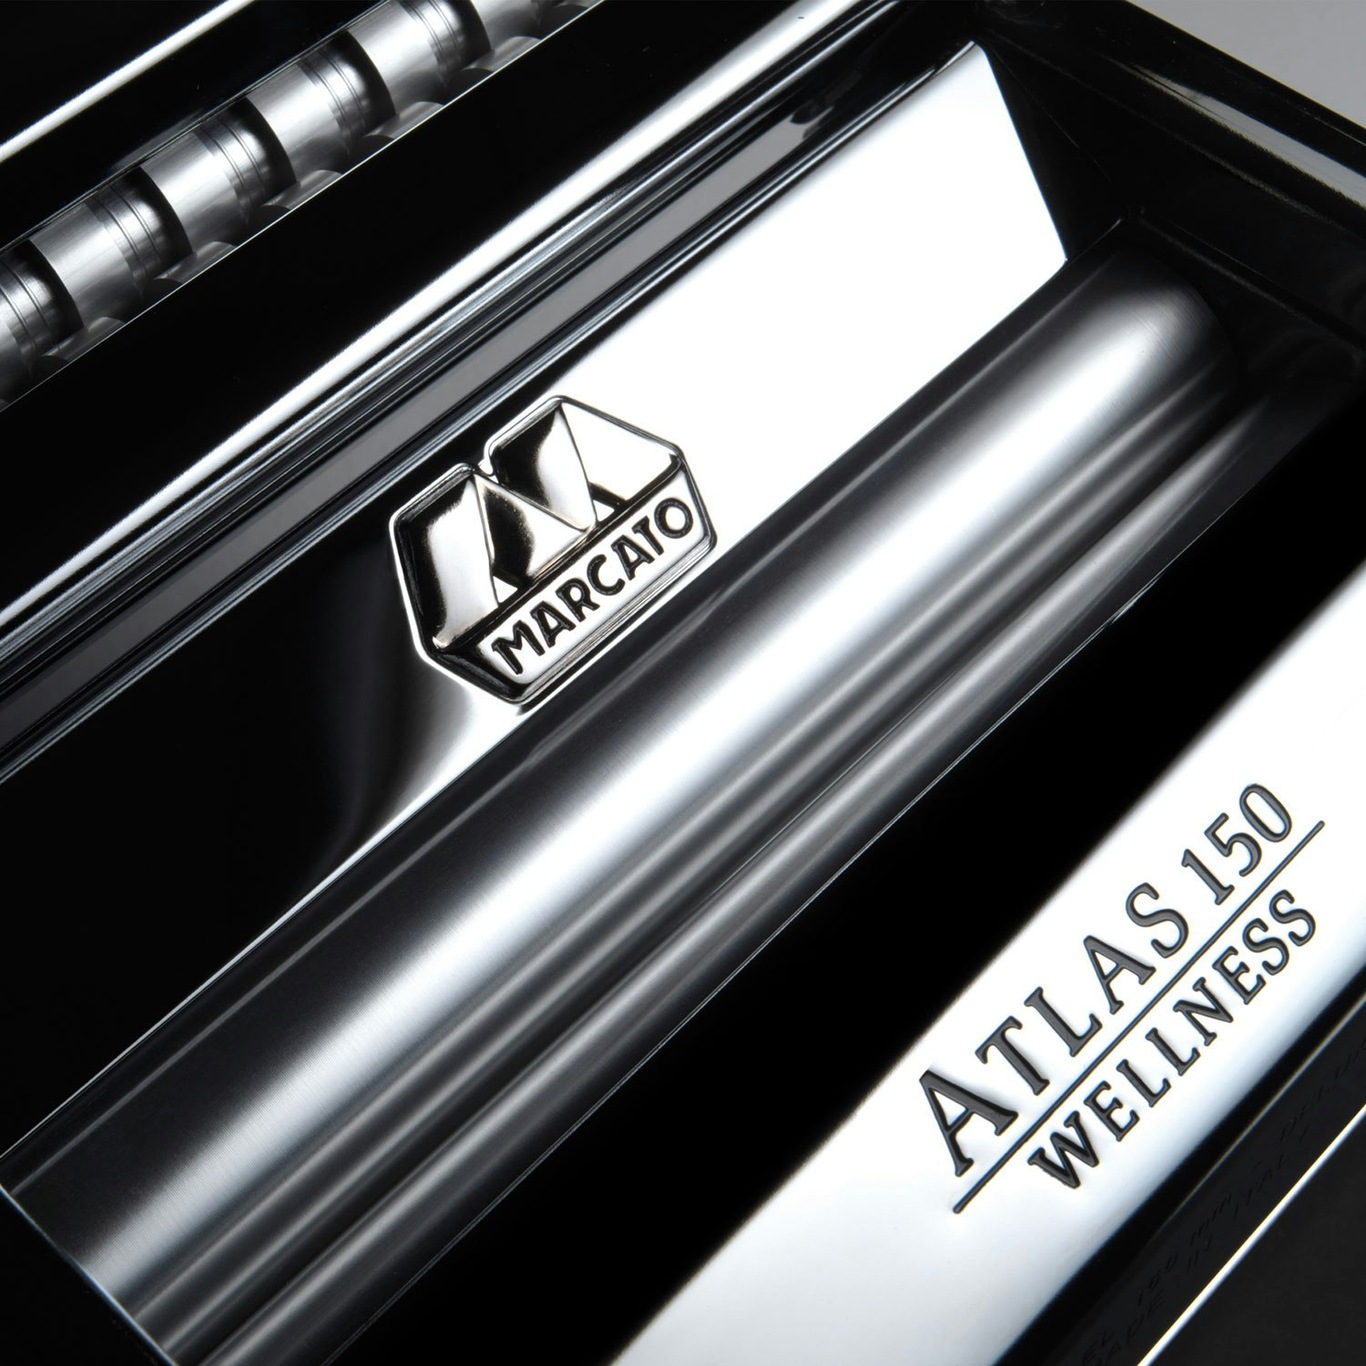 Atlas 150 Aluminum Pasta Maker + Reviews